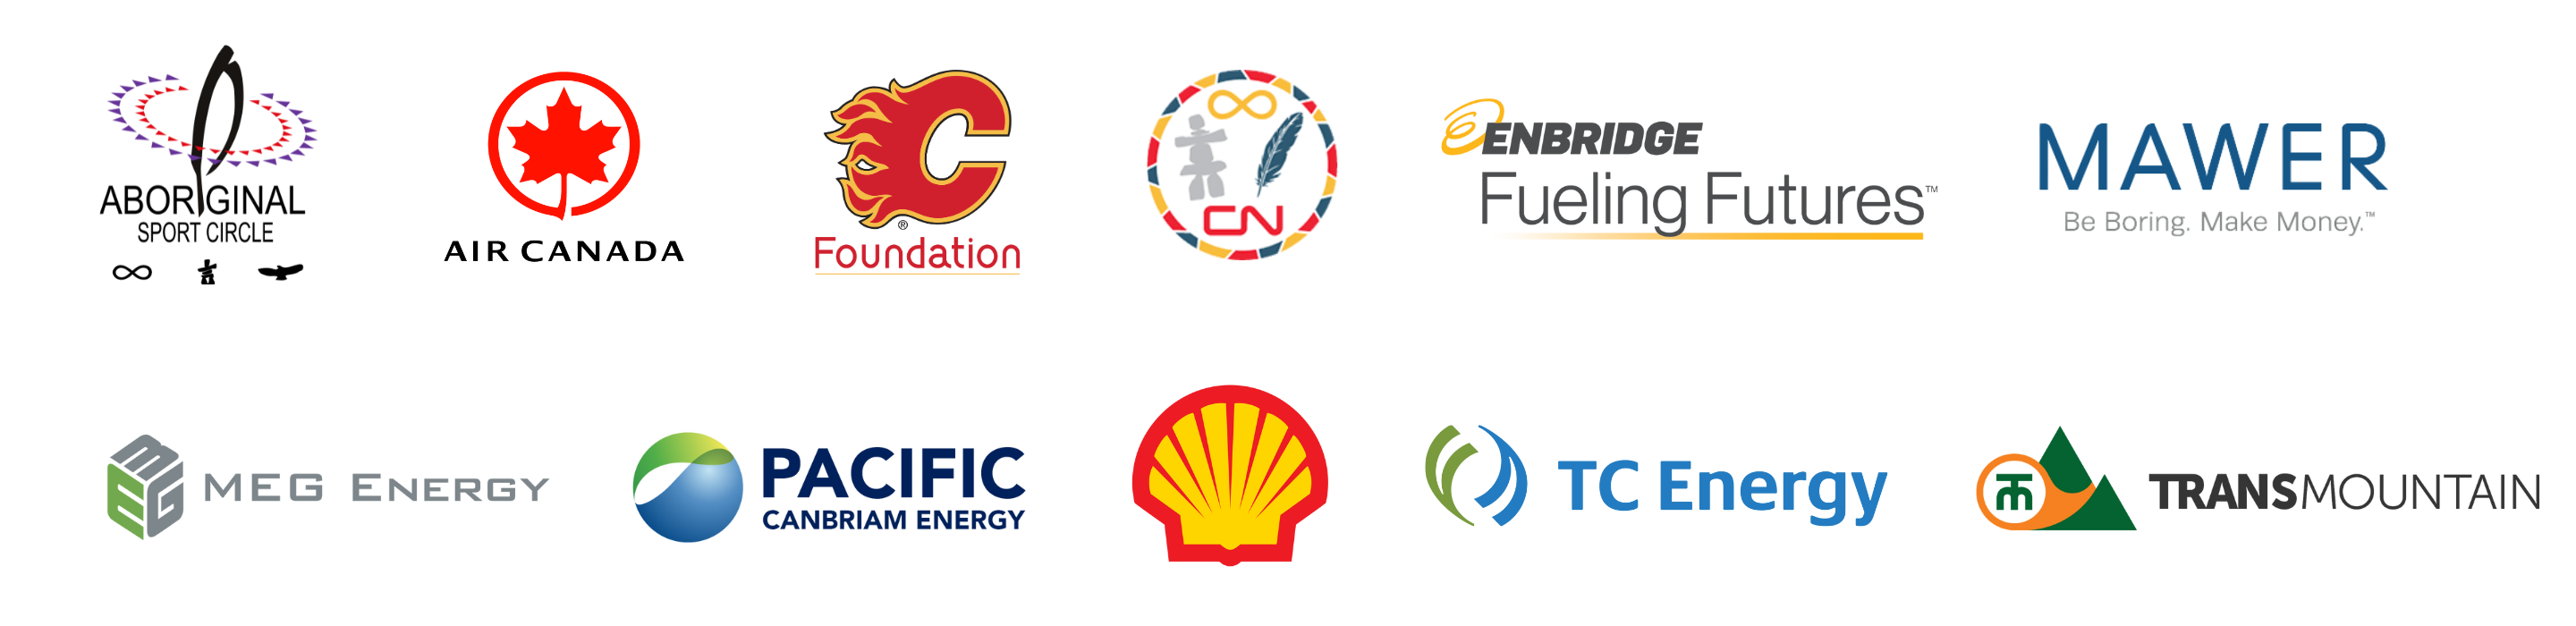 Aboriginal Sport Circle, Calgary Flames Foundation, CN, Enbridge, Mawer, MEG Energy, Pacific Canbriam Energy, Shell Corporation, TC Energy, TransMountain